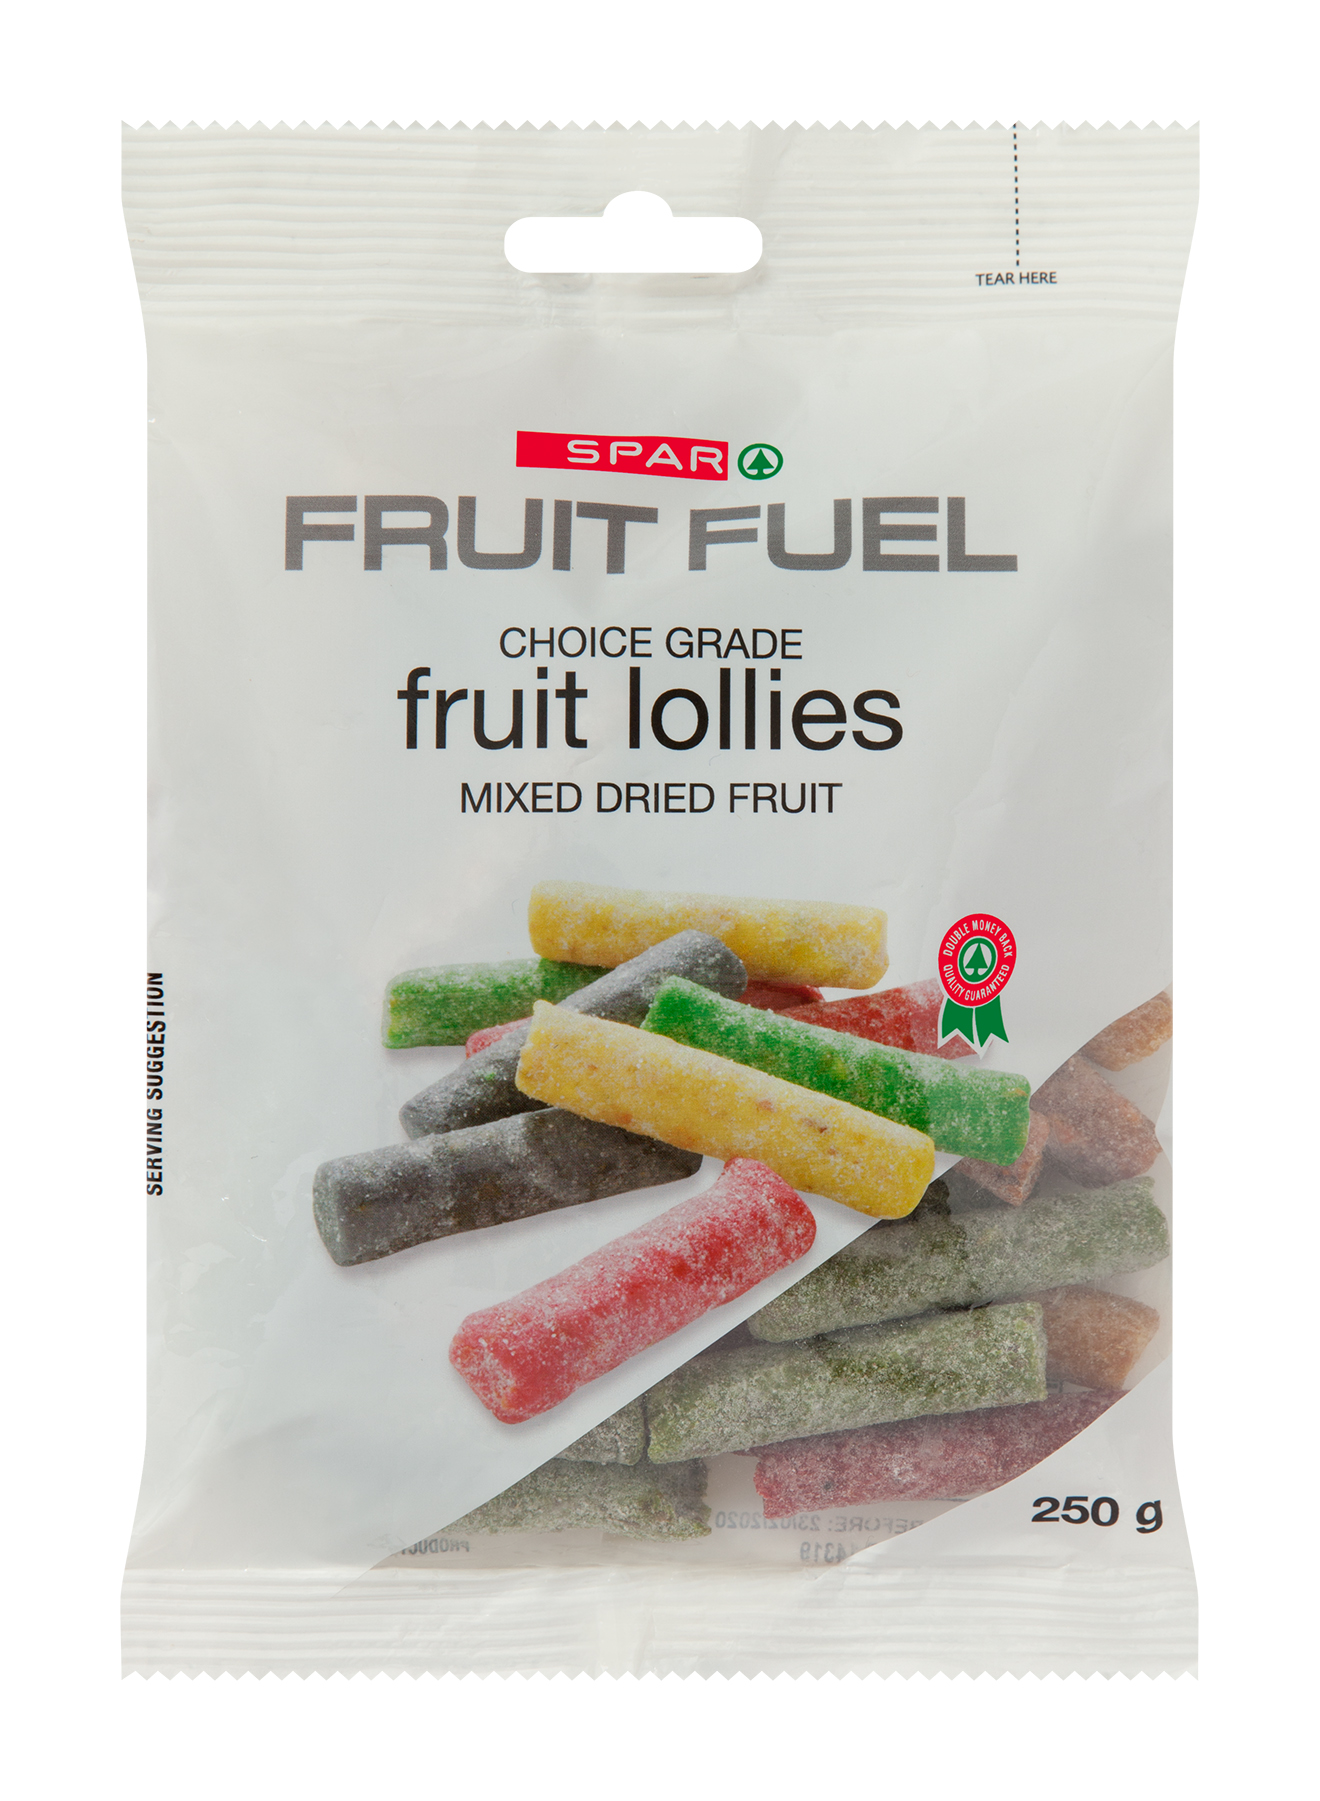 fruit fuel fruit lollies, mixed dried fruit 